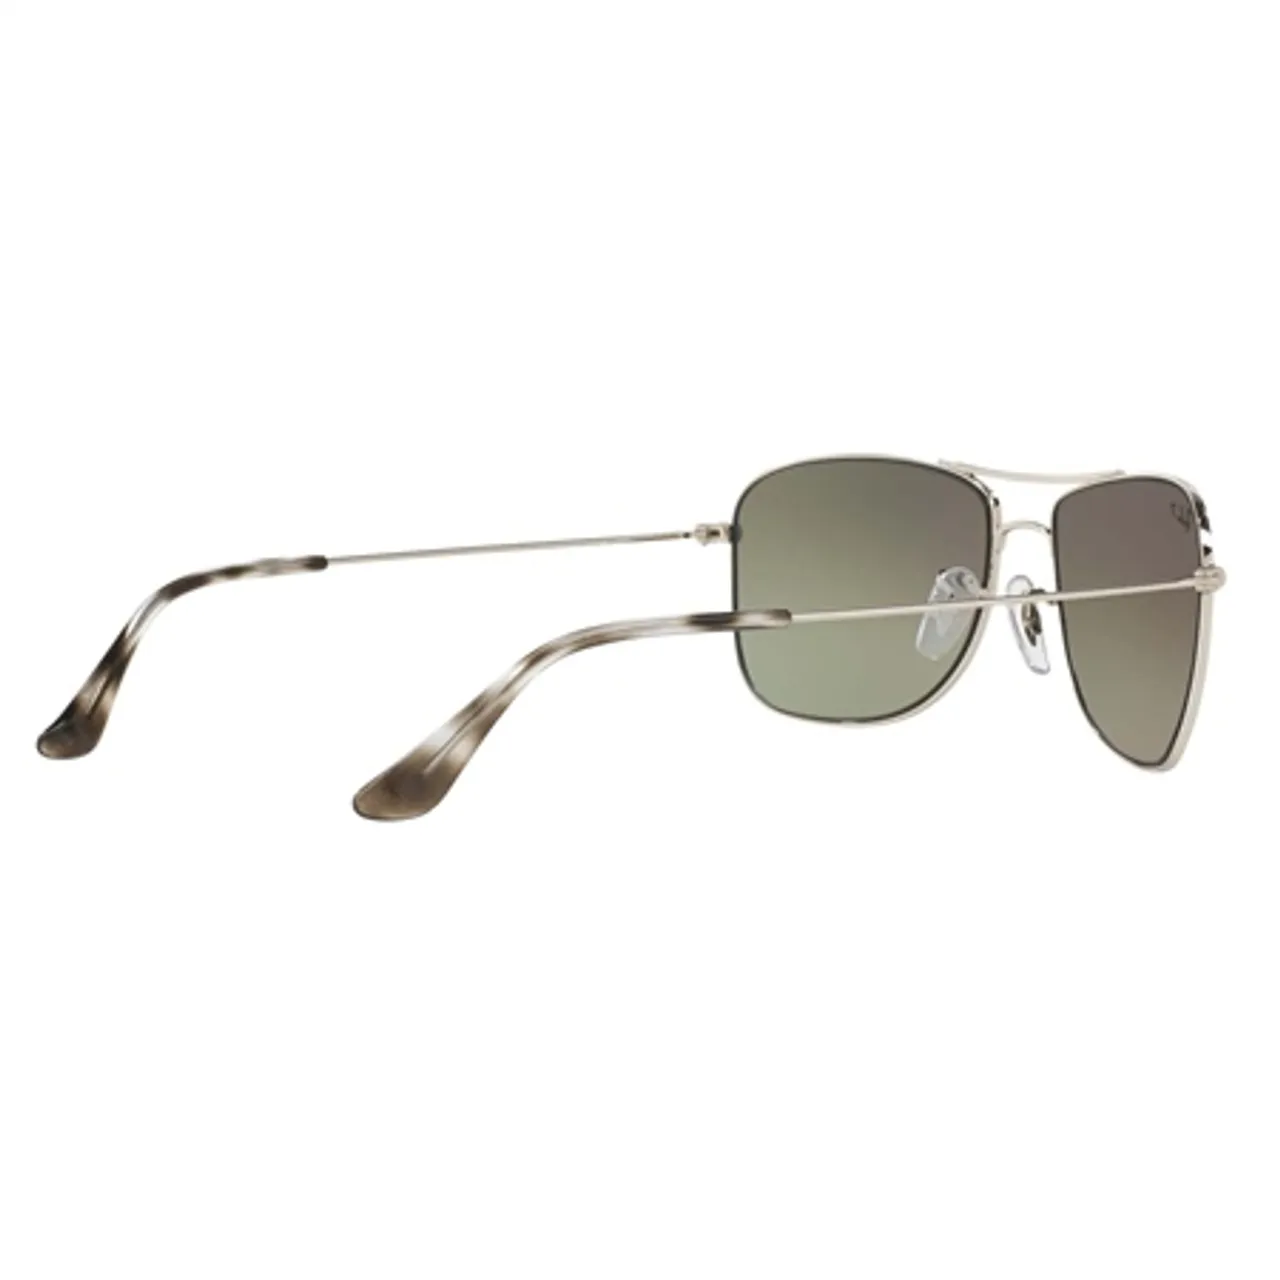 Ray-Ban Chromance Sunglasses - Silver